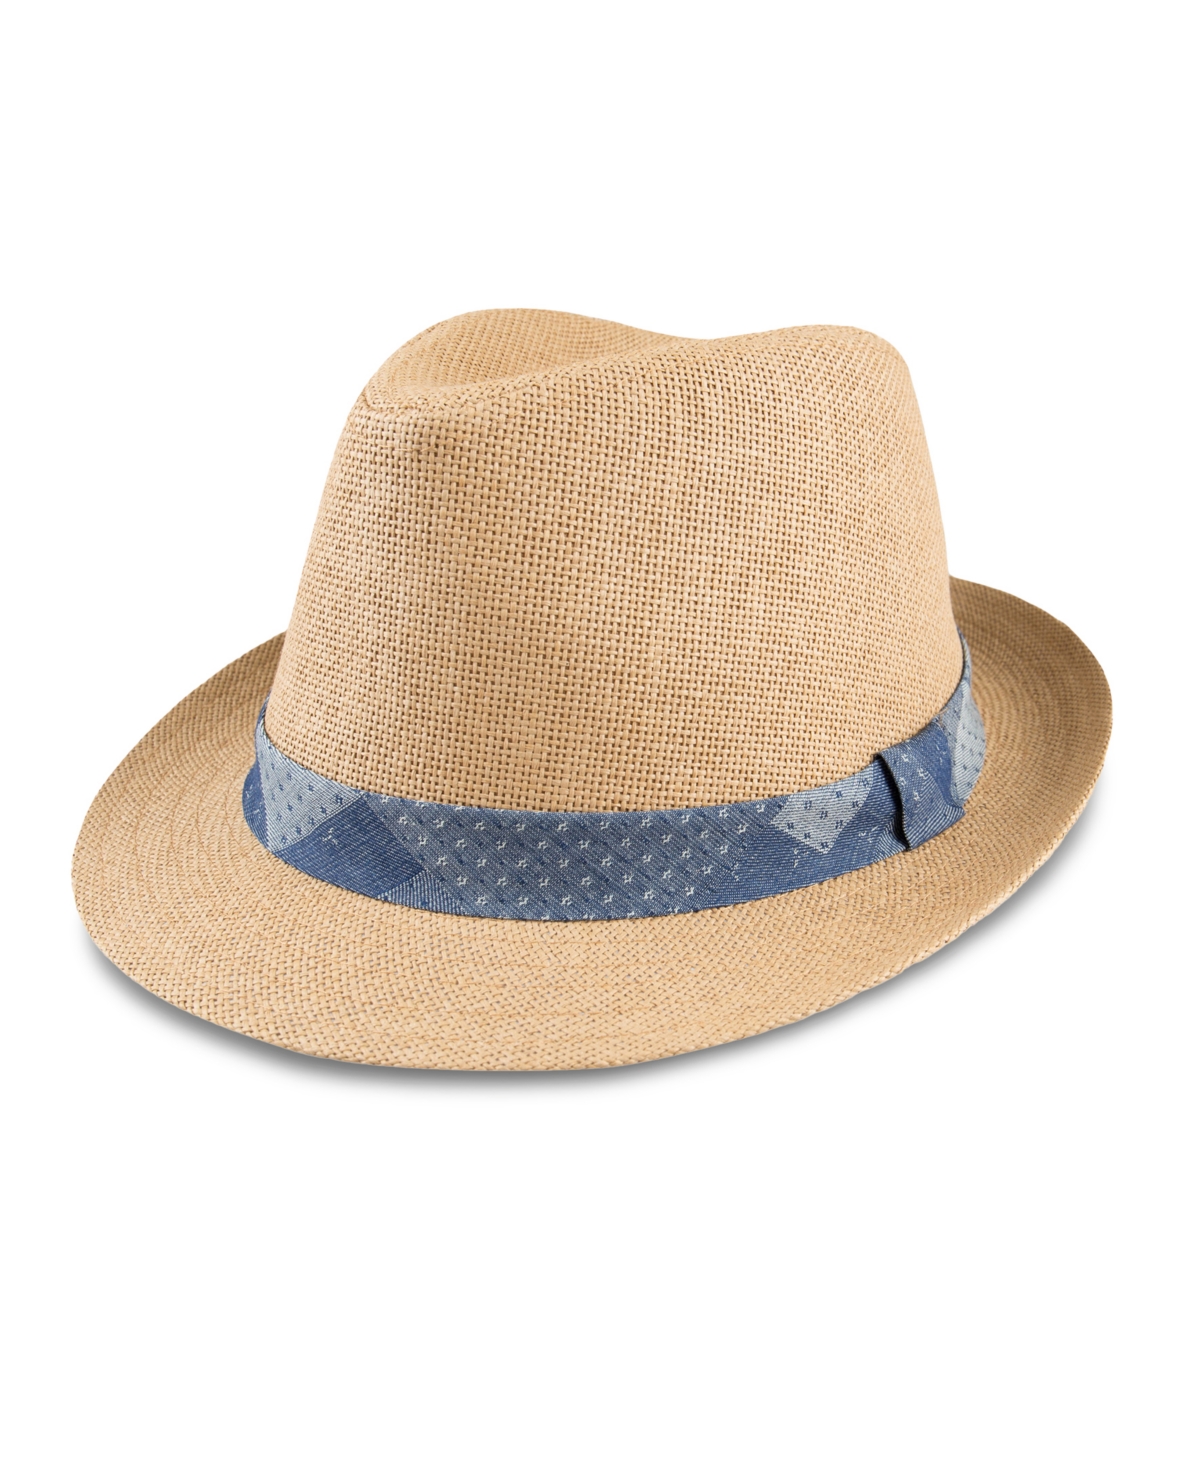 Men's Straw Fedora Hat with Denim Patchwork Band - Tan